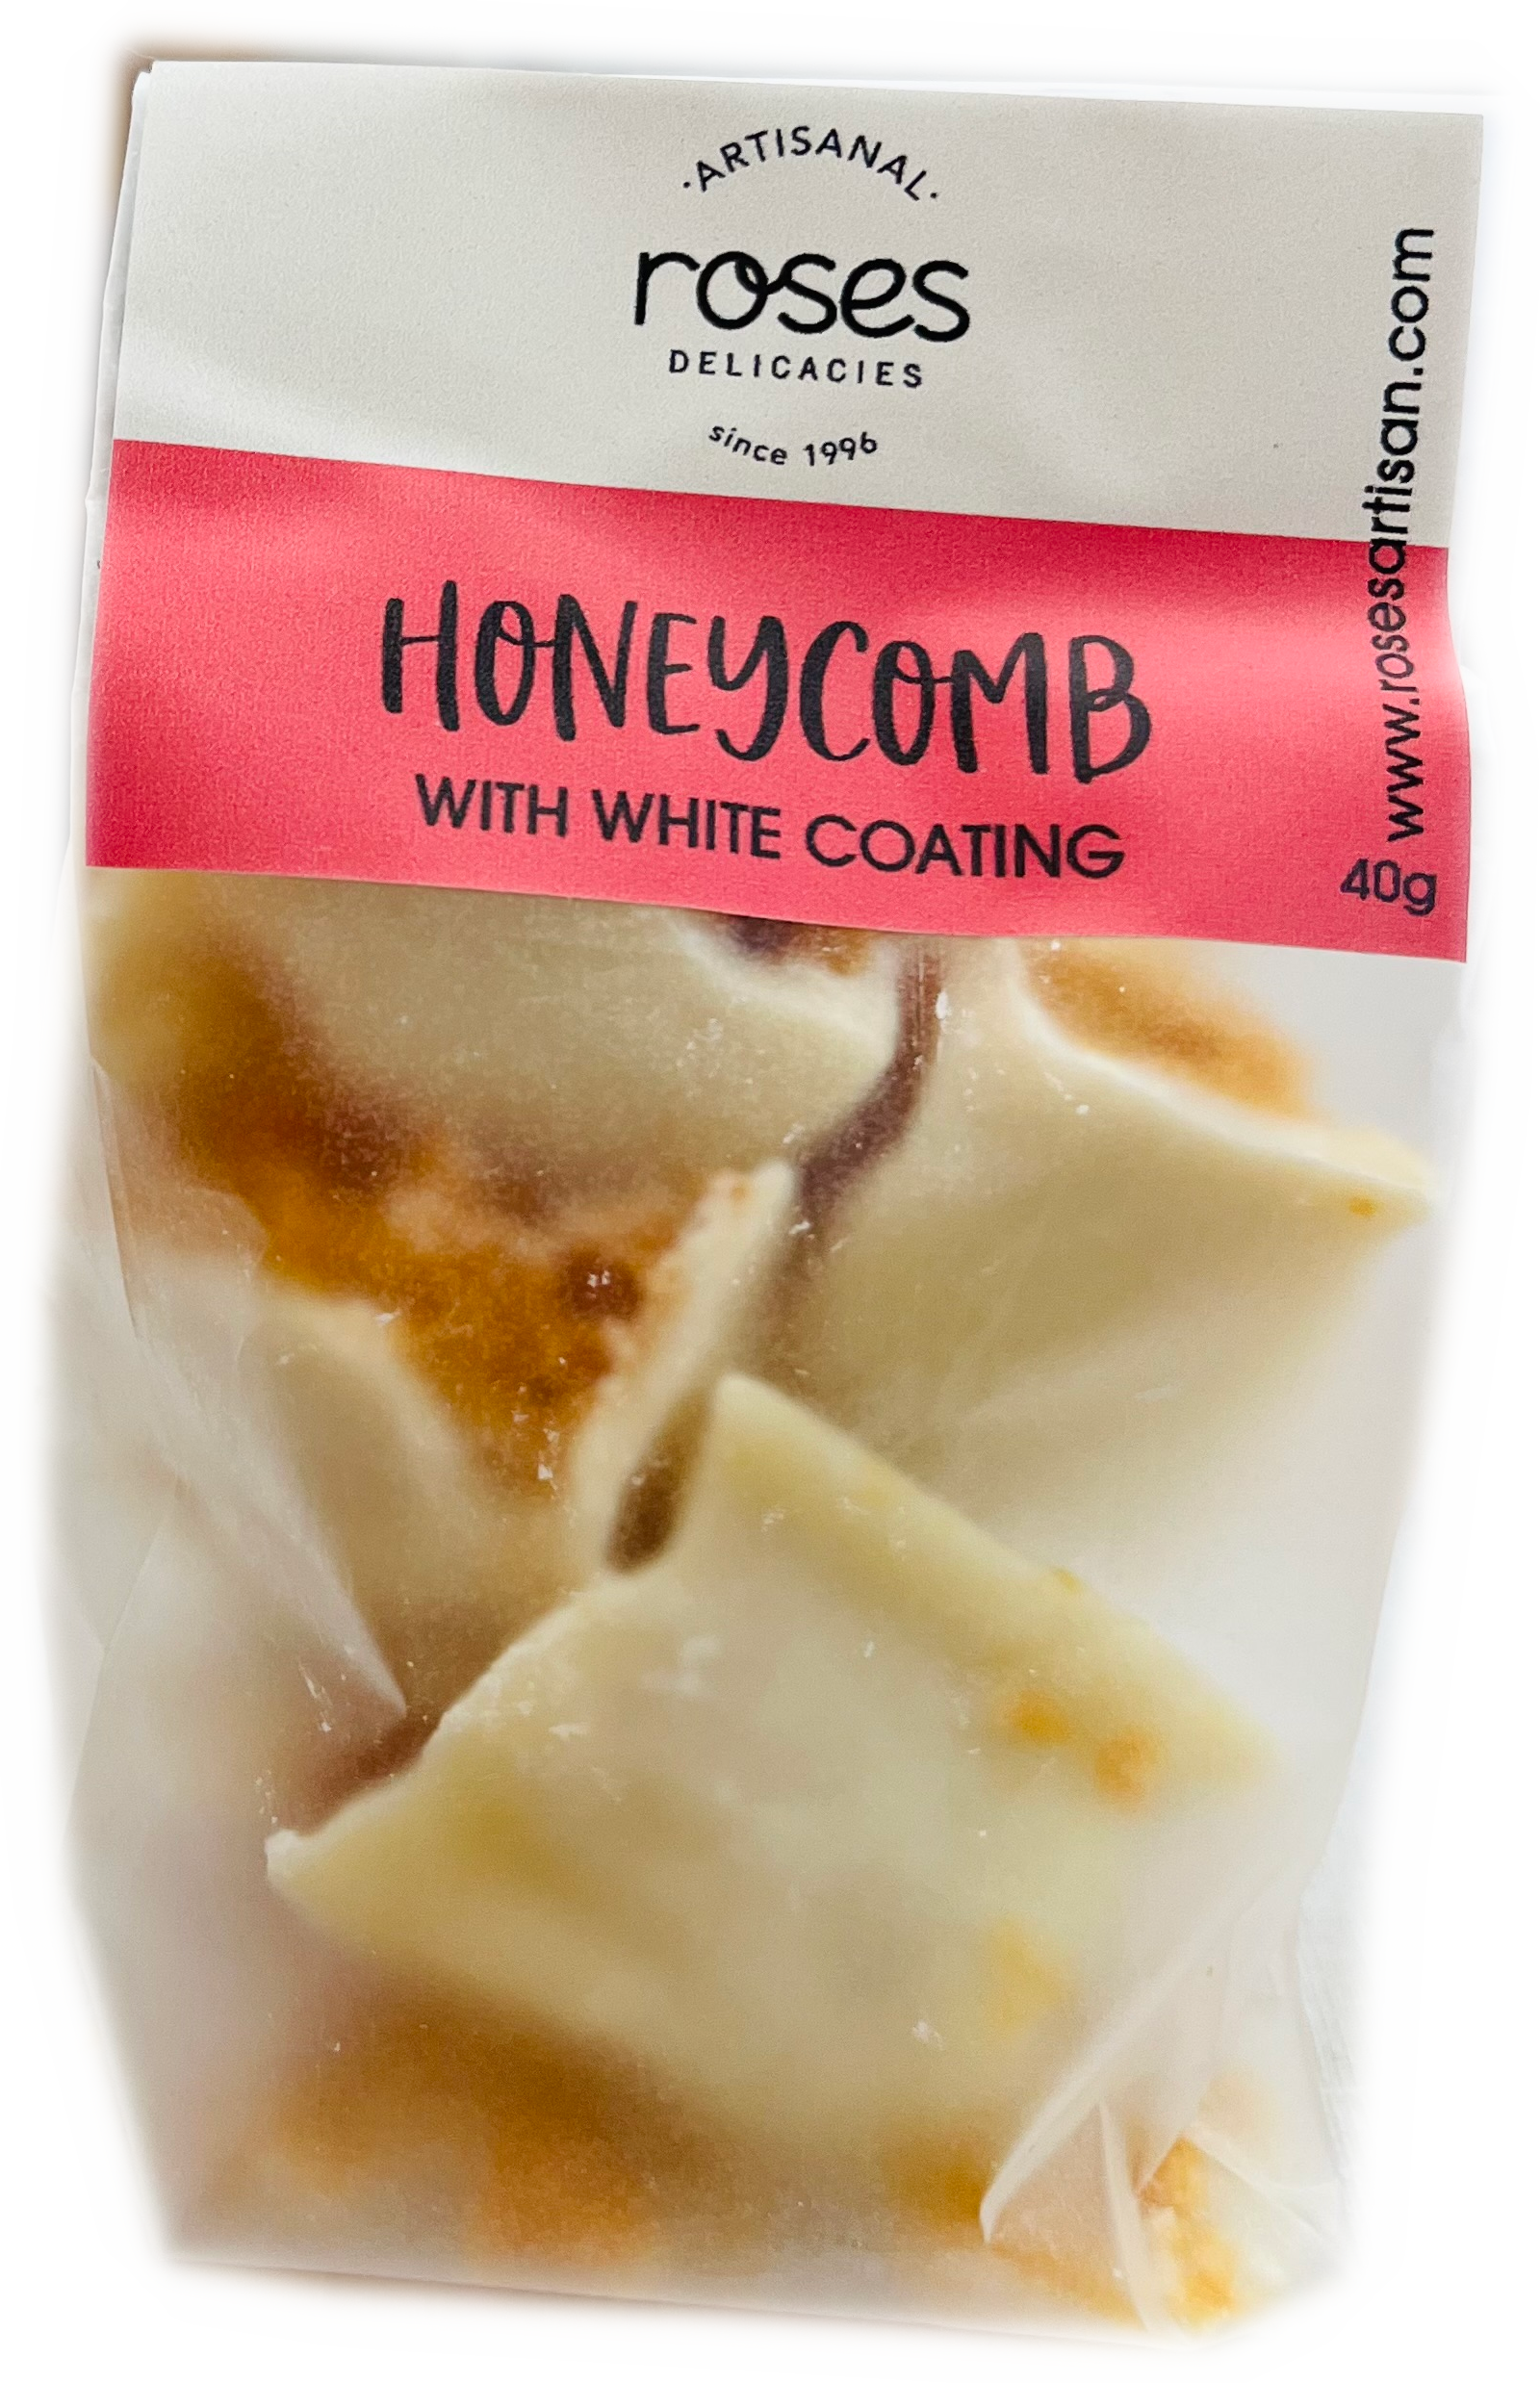 Honeycomb with White Coating